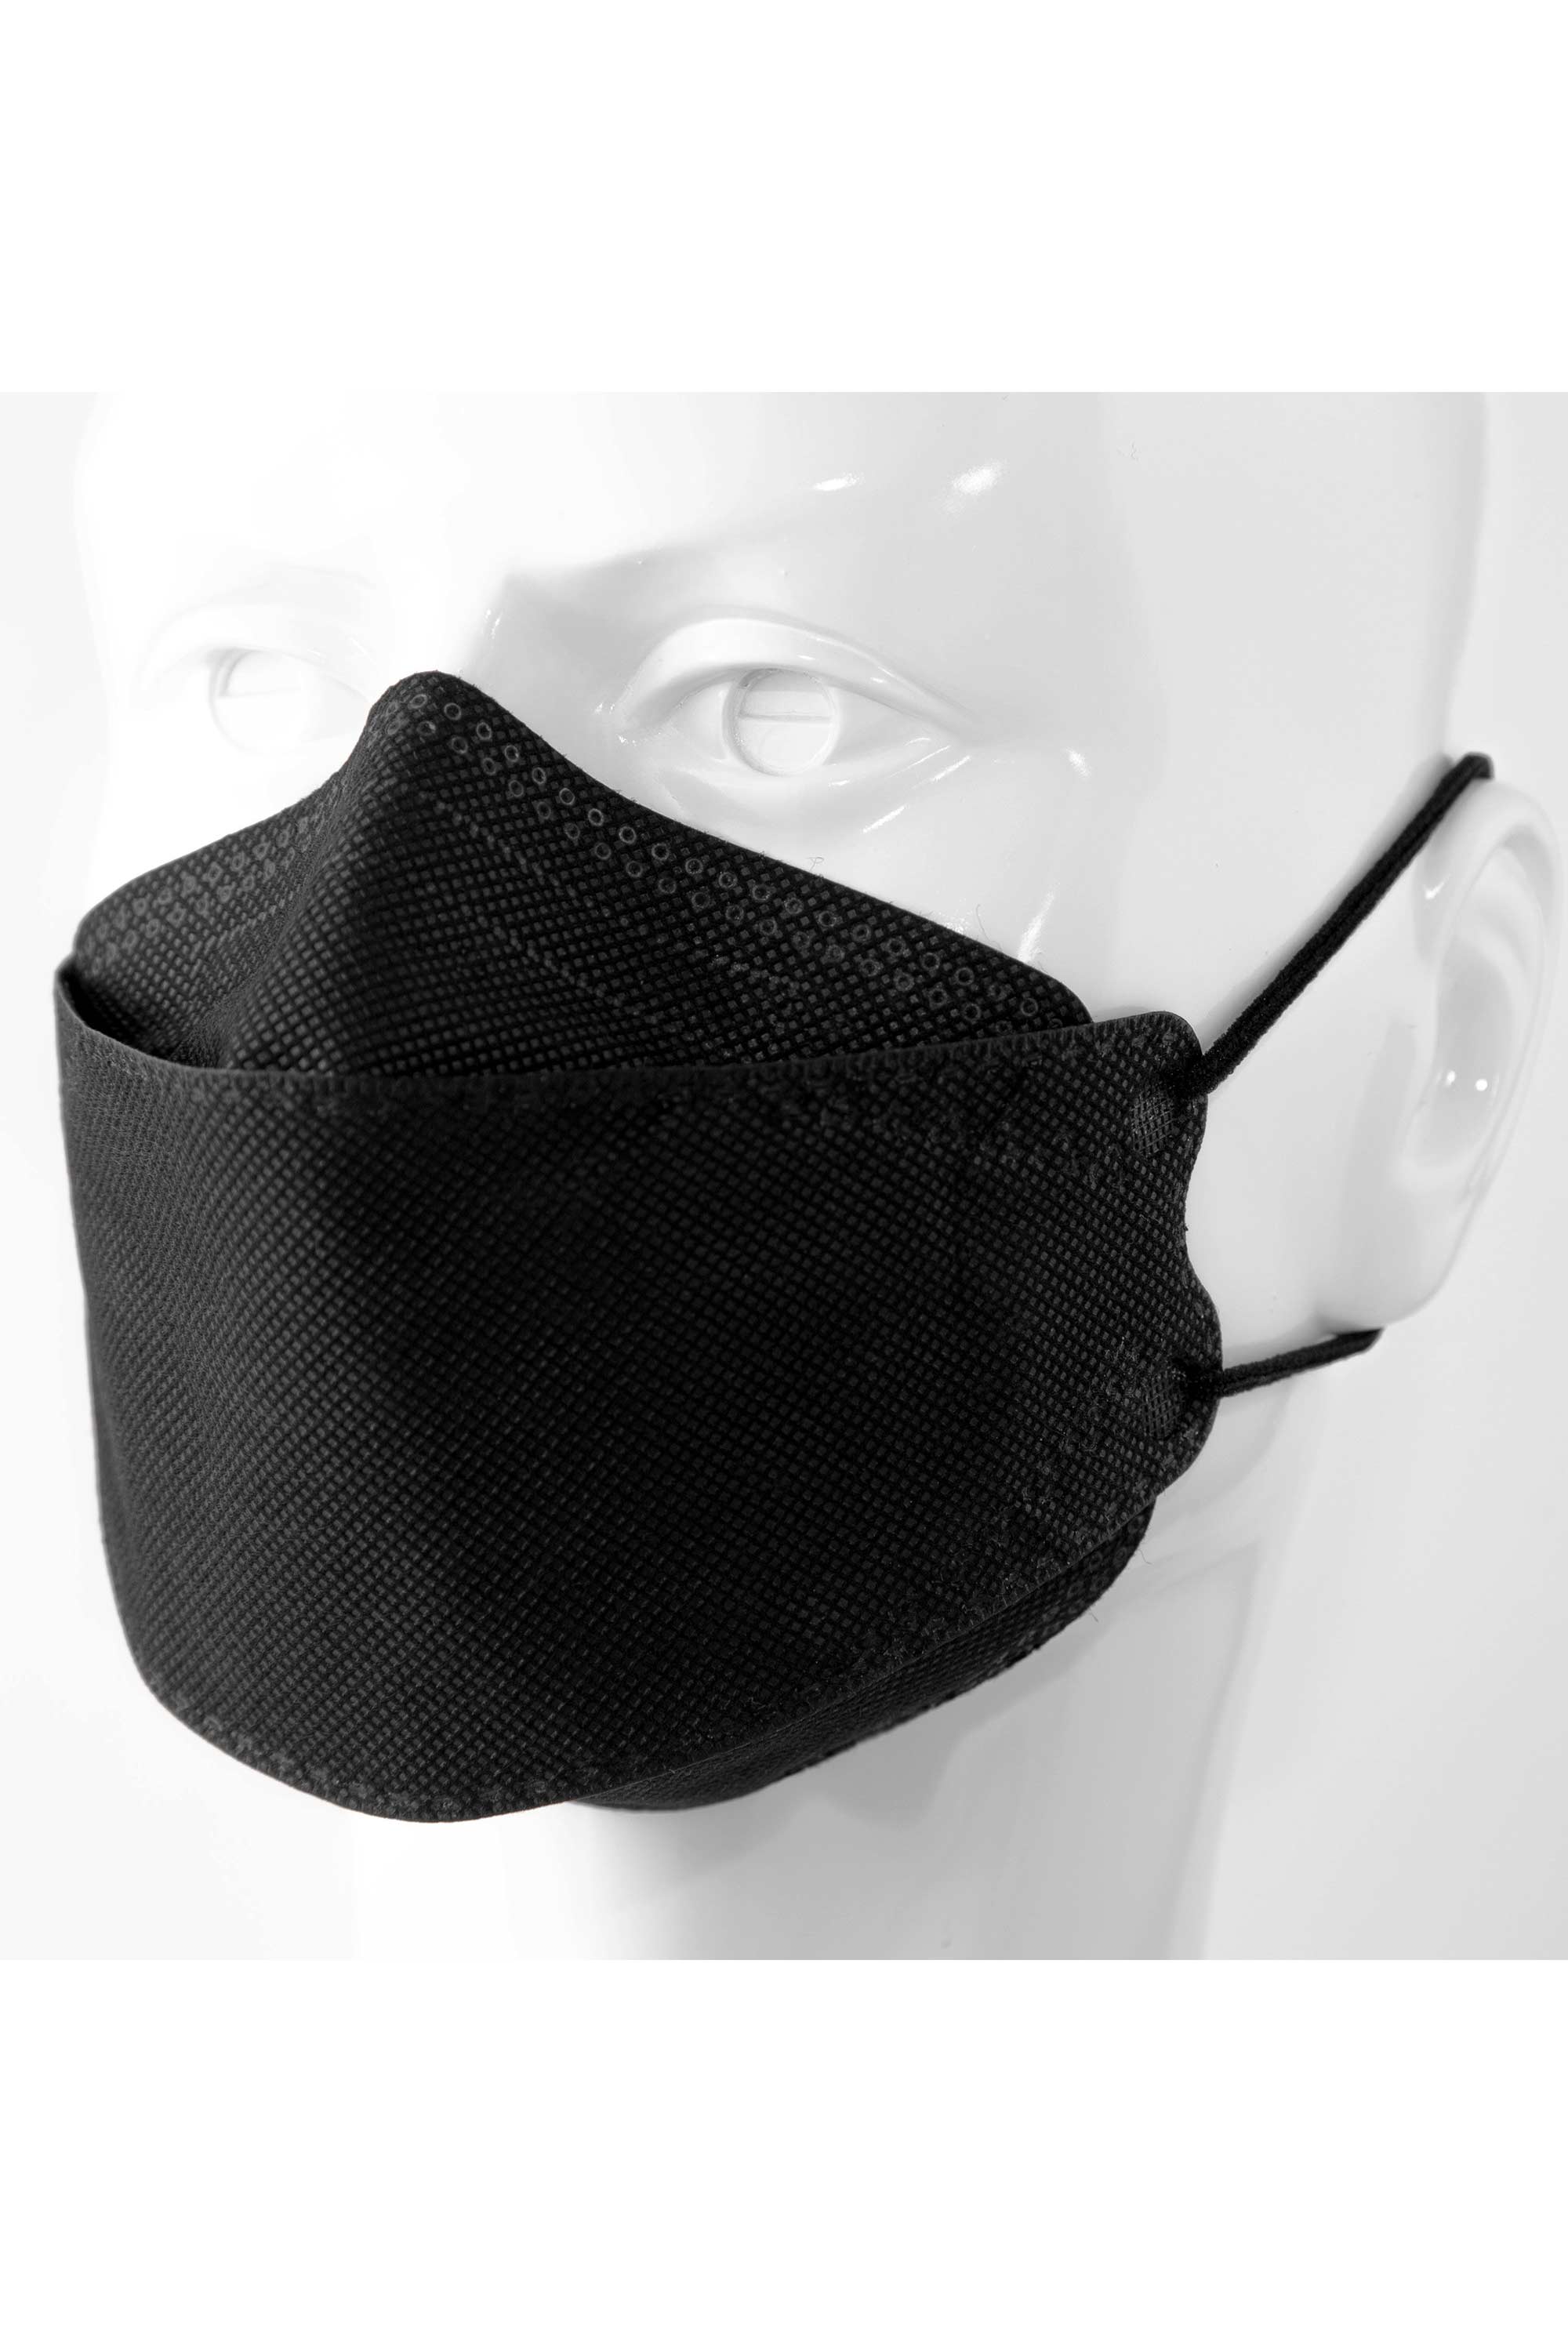 Black KF94 Face Mask - 50 Pack - Individually Sealed